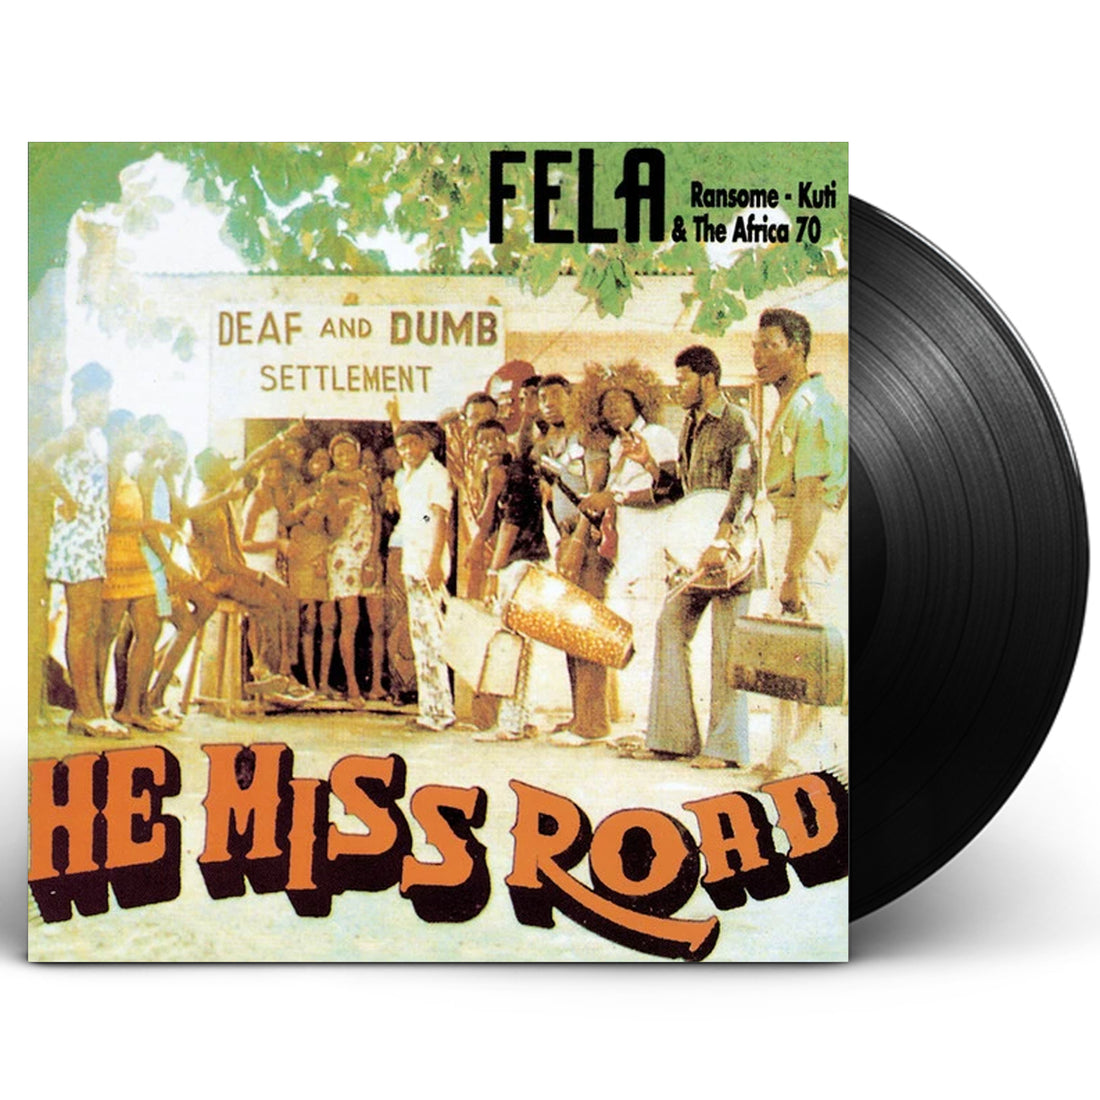 FELA KUTI "HE MISS ROAD" (1975) LP VINYL